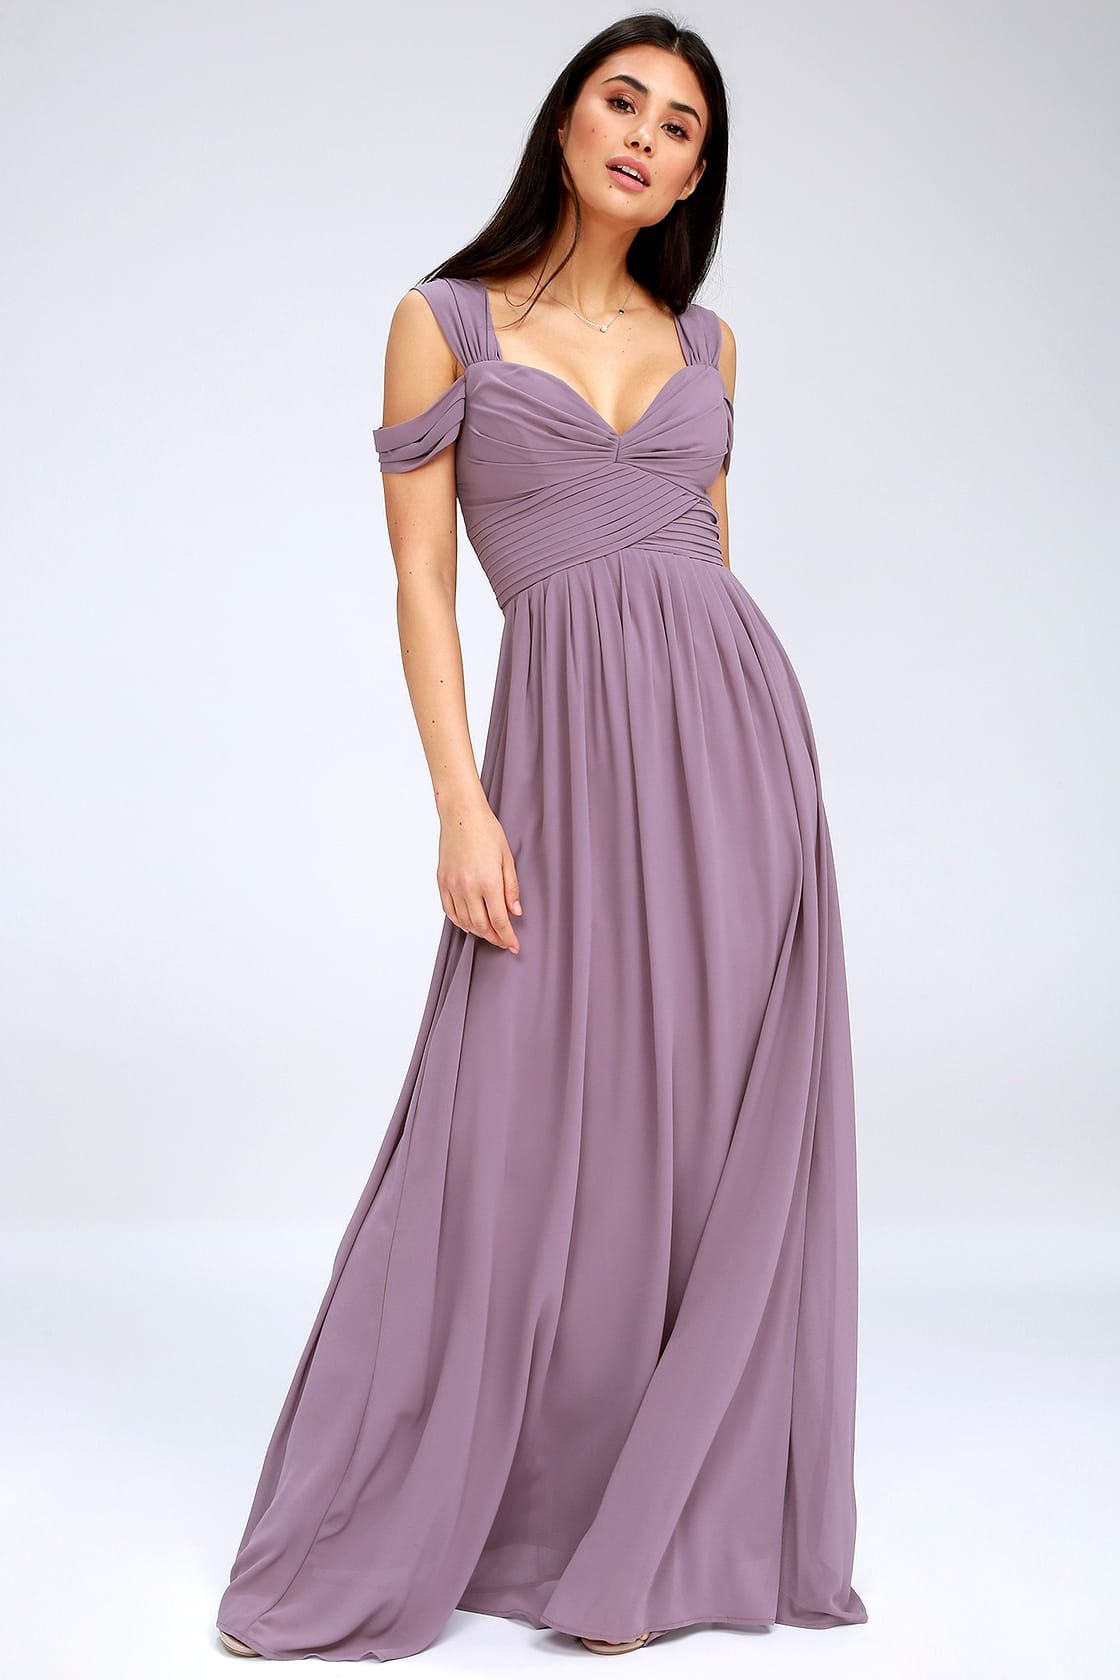 violet purple dress